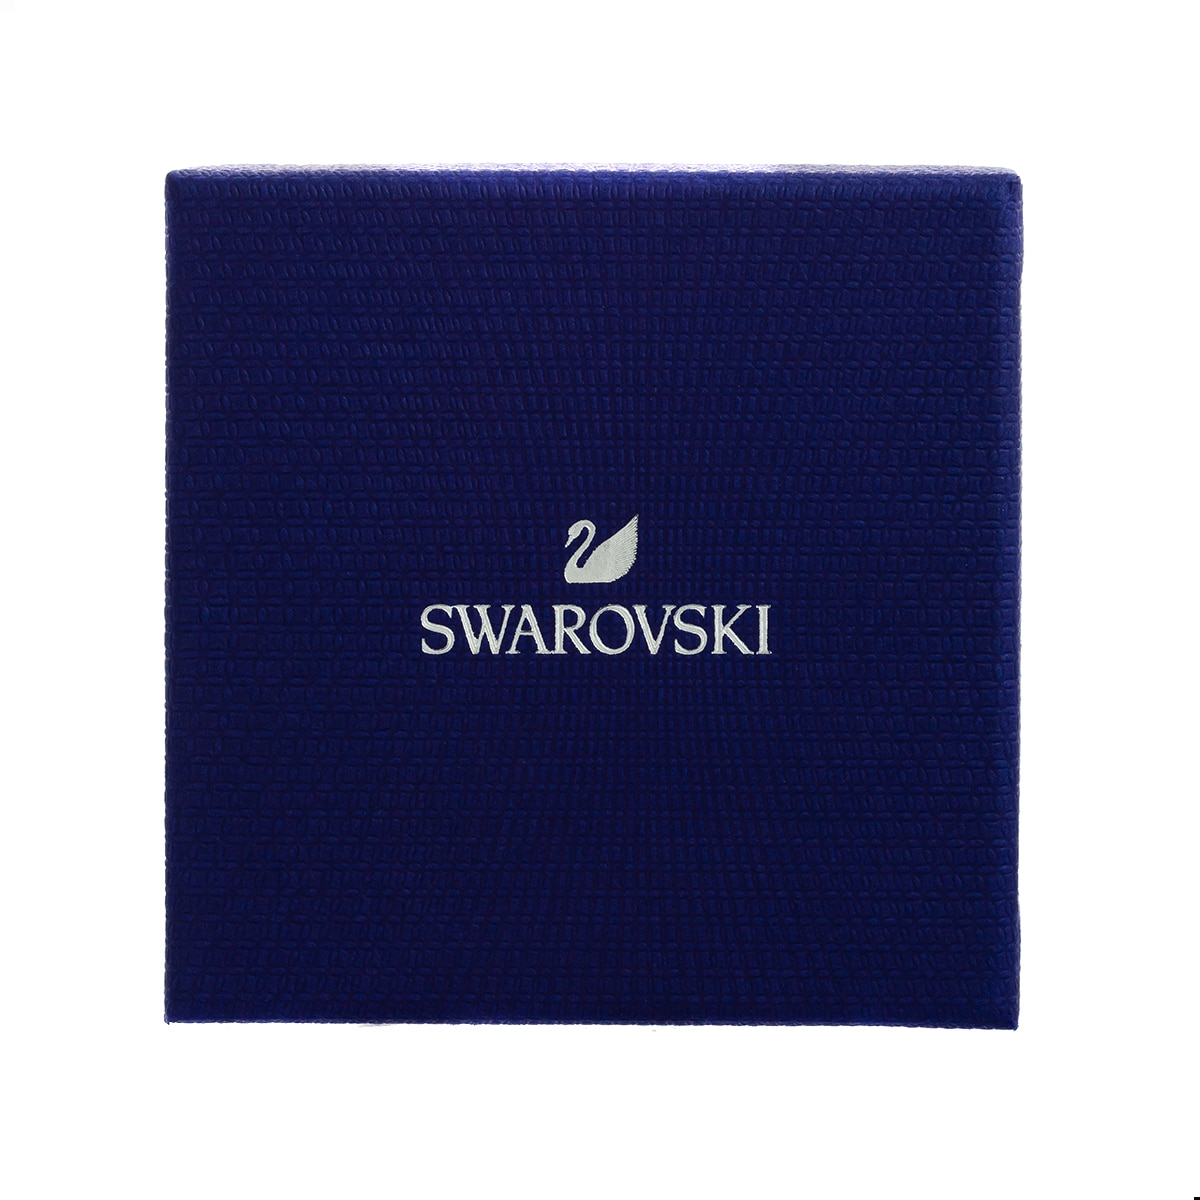 Swarovski Iconic Swan Stud Pierced Earring Jackets